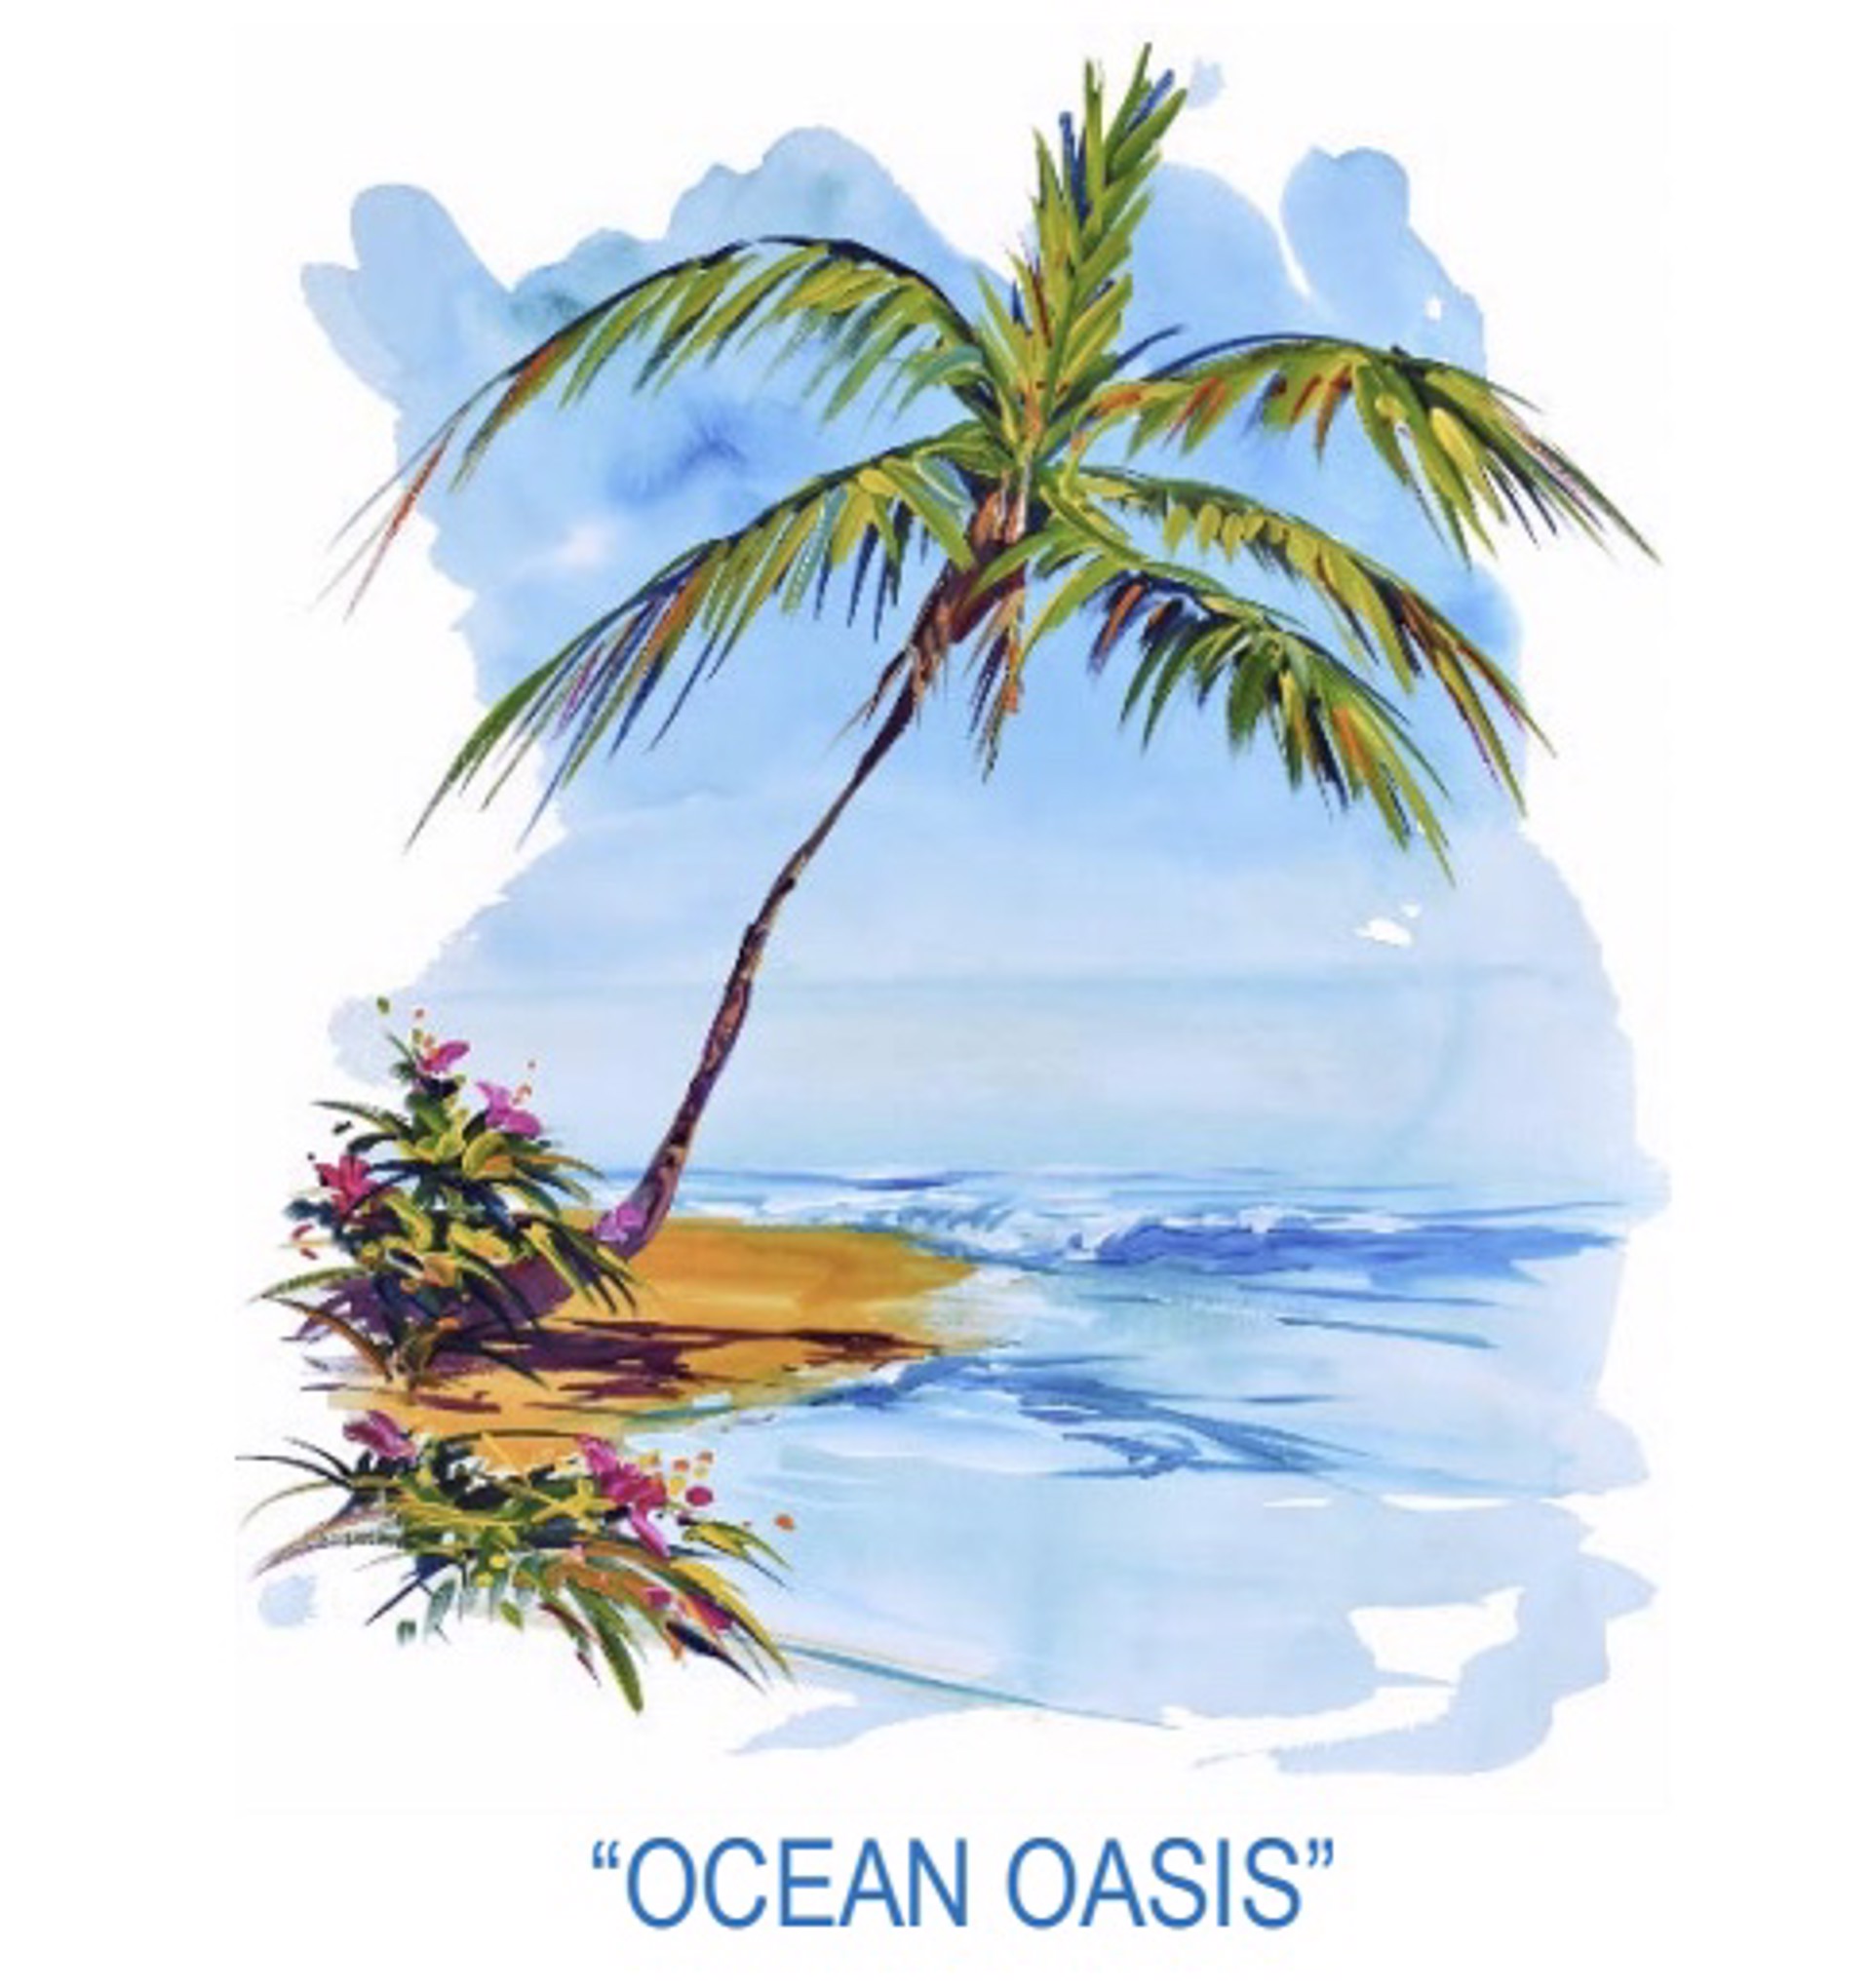 Ocean Oasis by Steve Barton